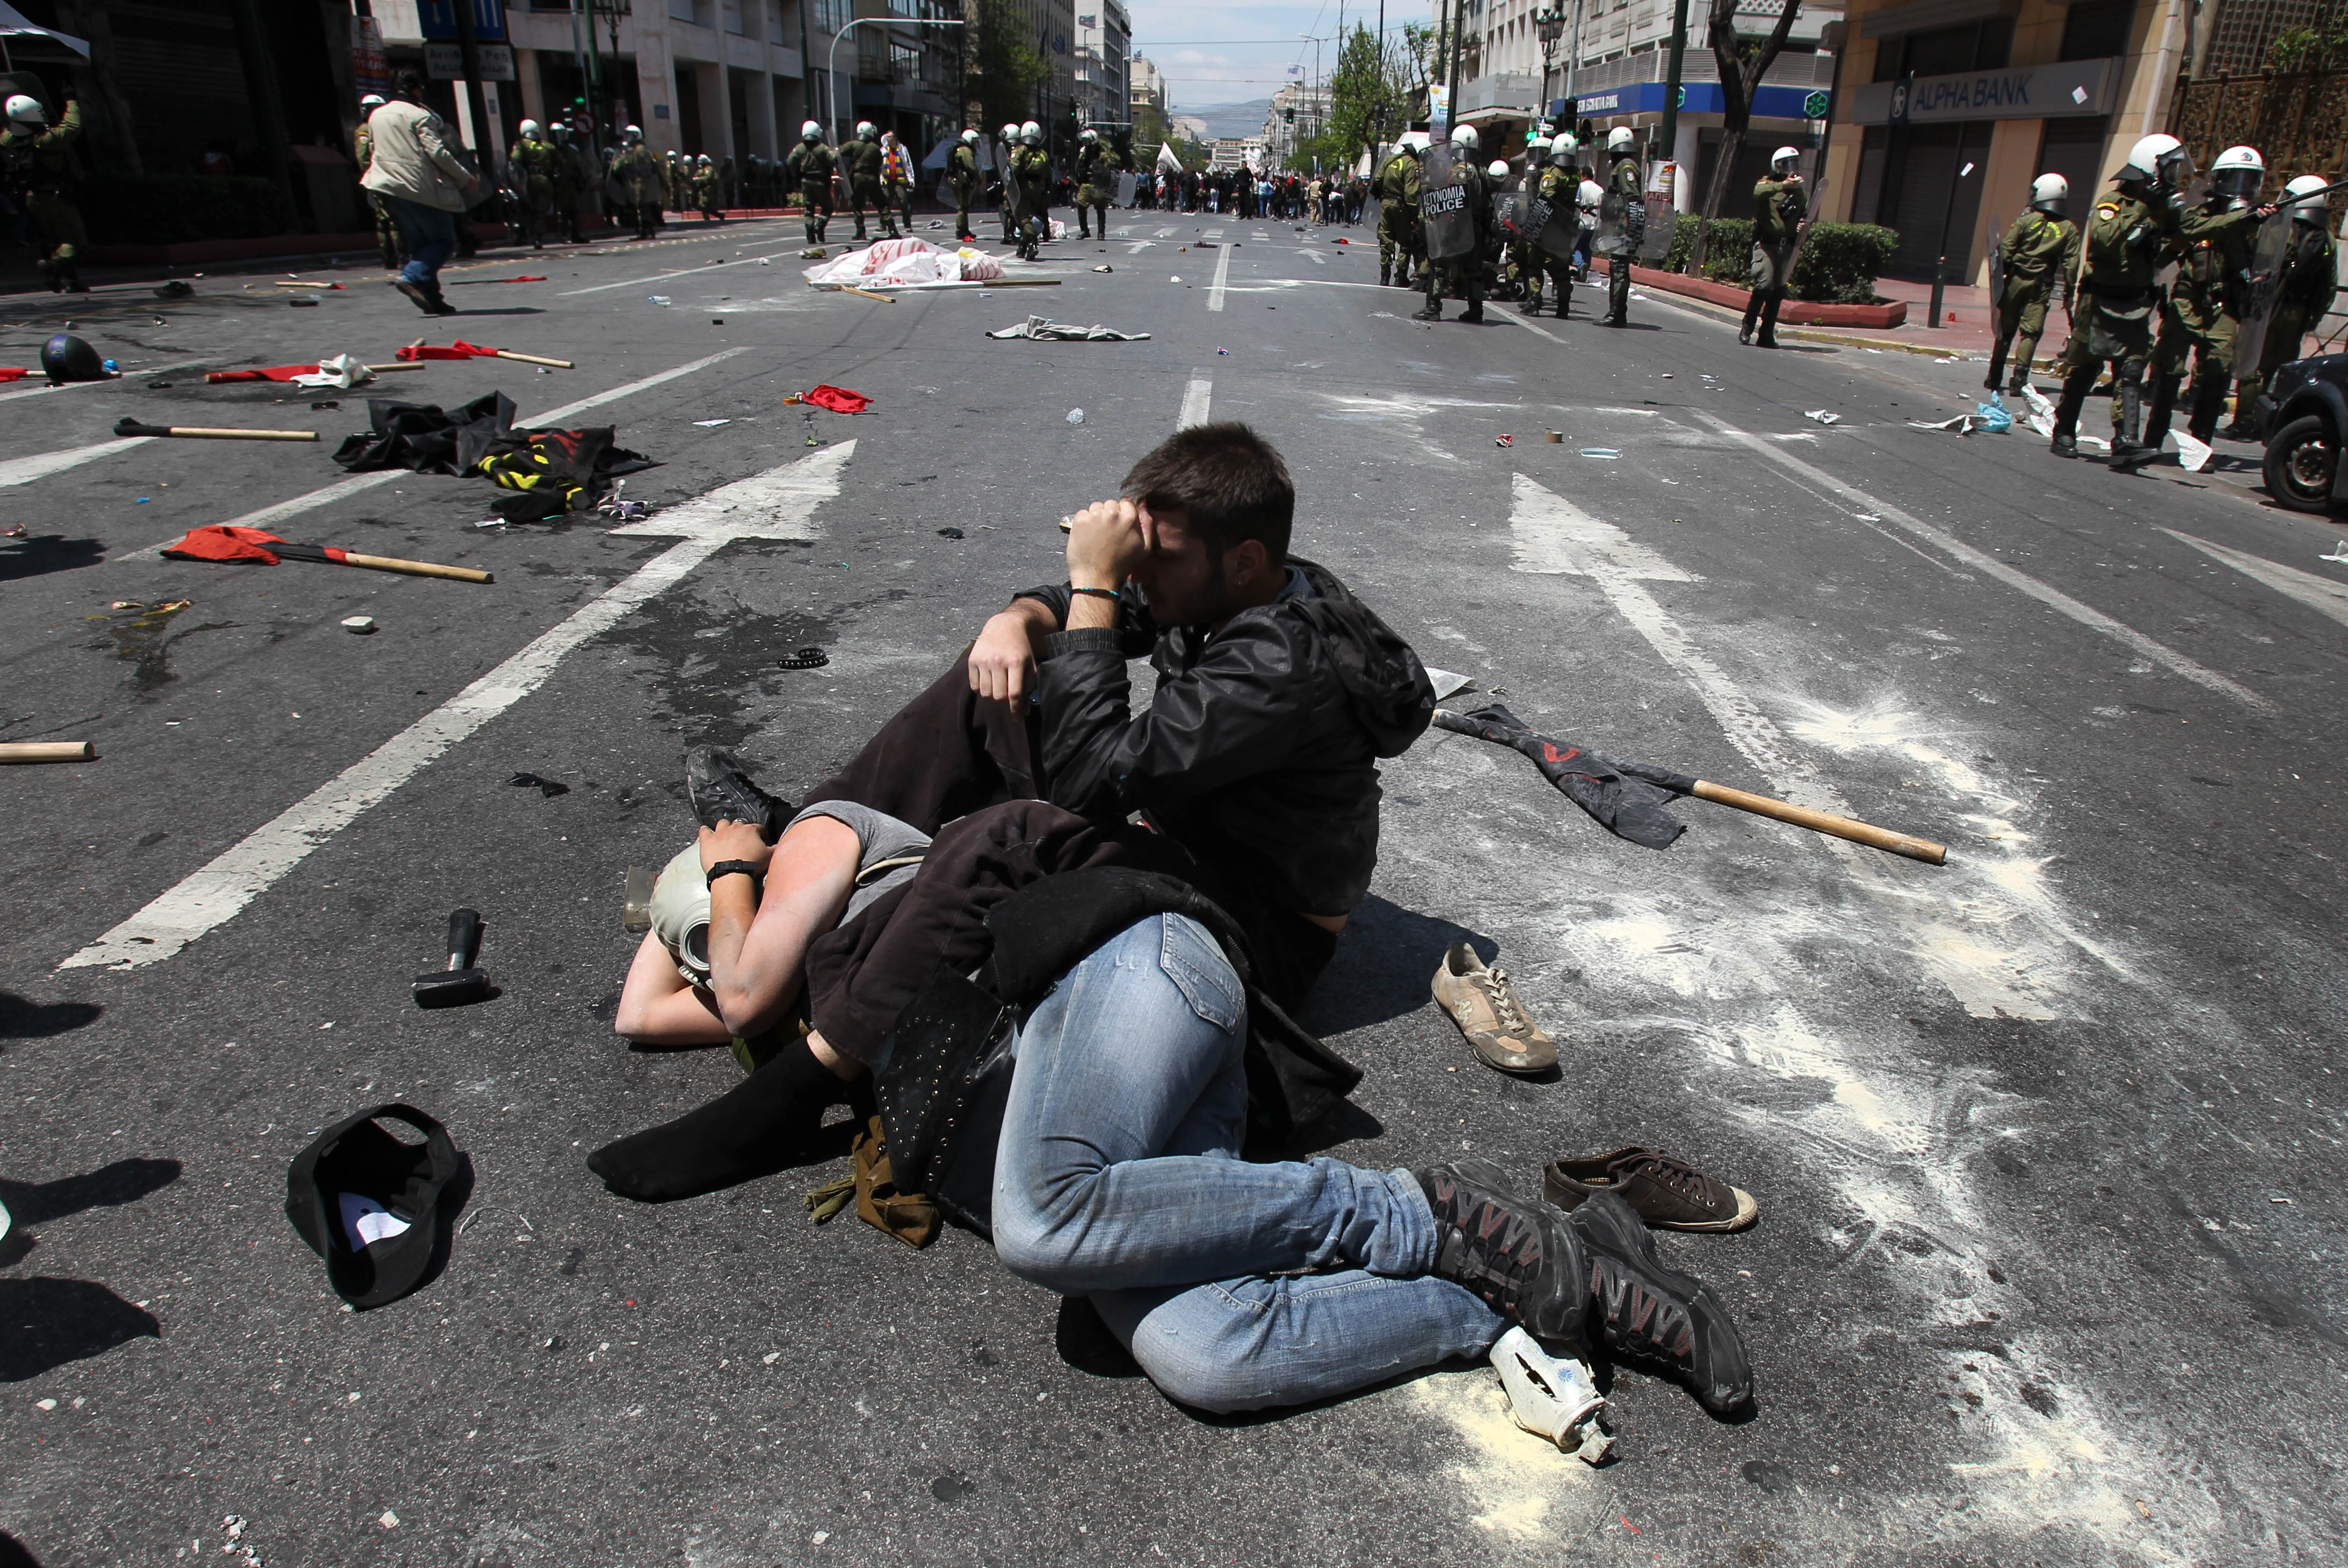 Kravallpolis har slagt hårt mot demonstranter. Tre poliser har slagit för hårt.